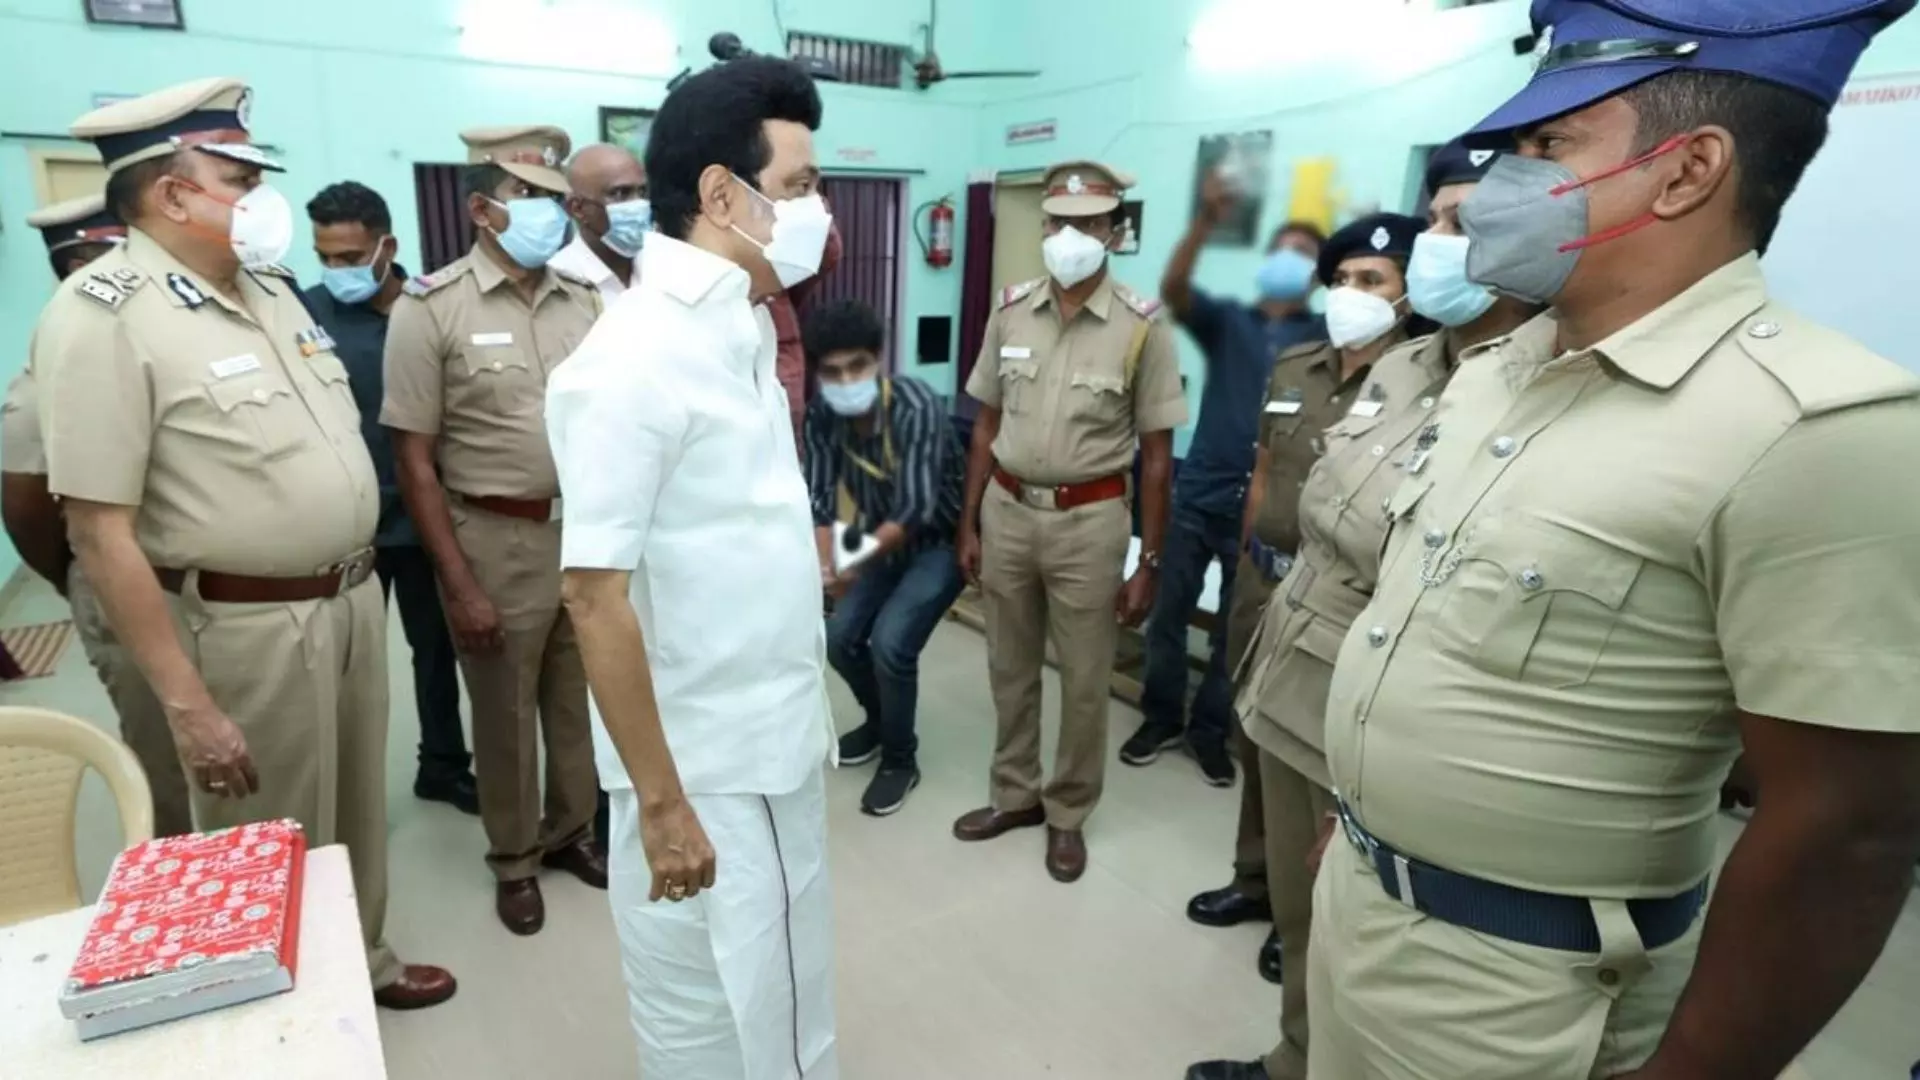 Tamil Nadu CM Stalin Made a Surprise Visit to the Adhiyamankottai Police Station Last Night 29 09 2021